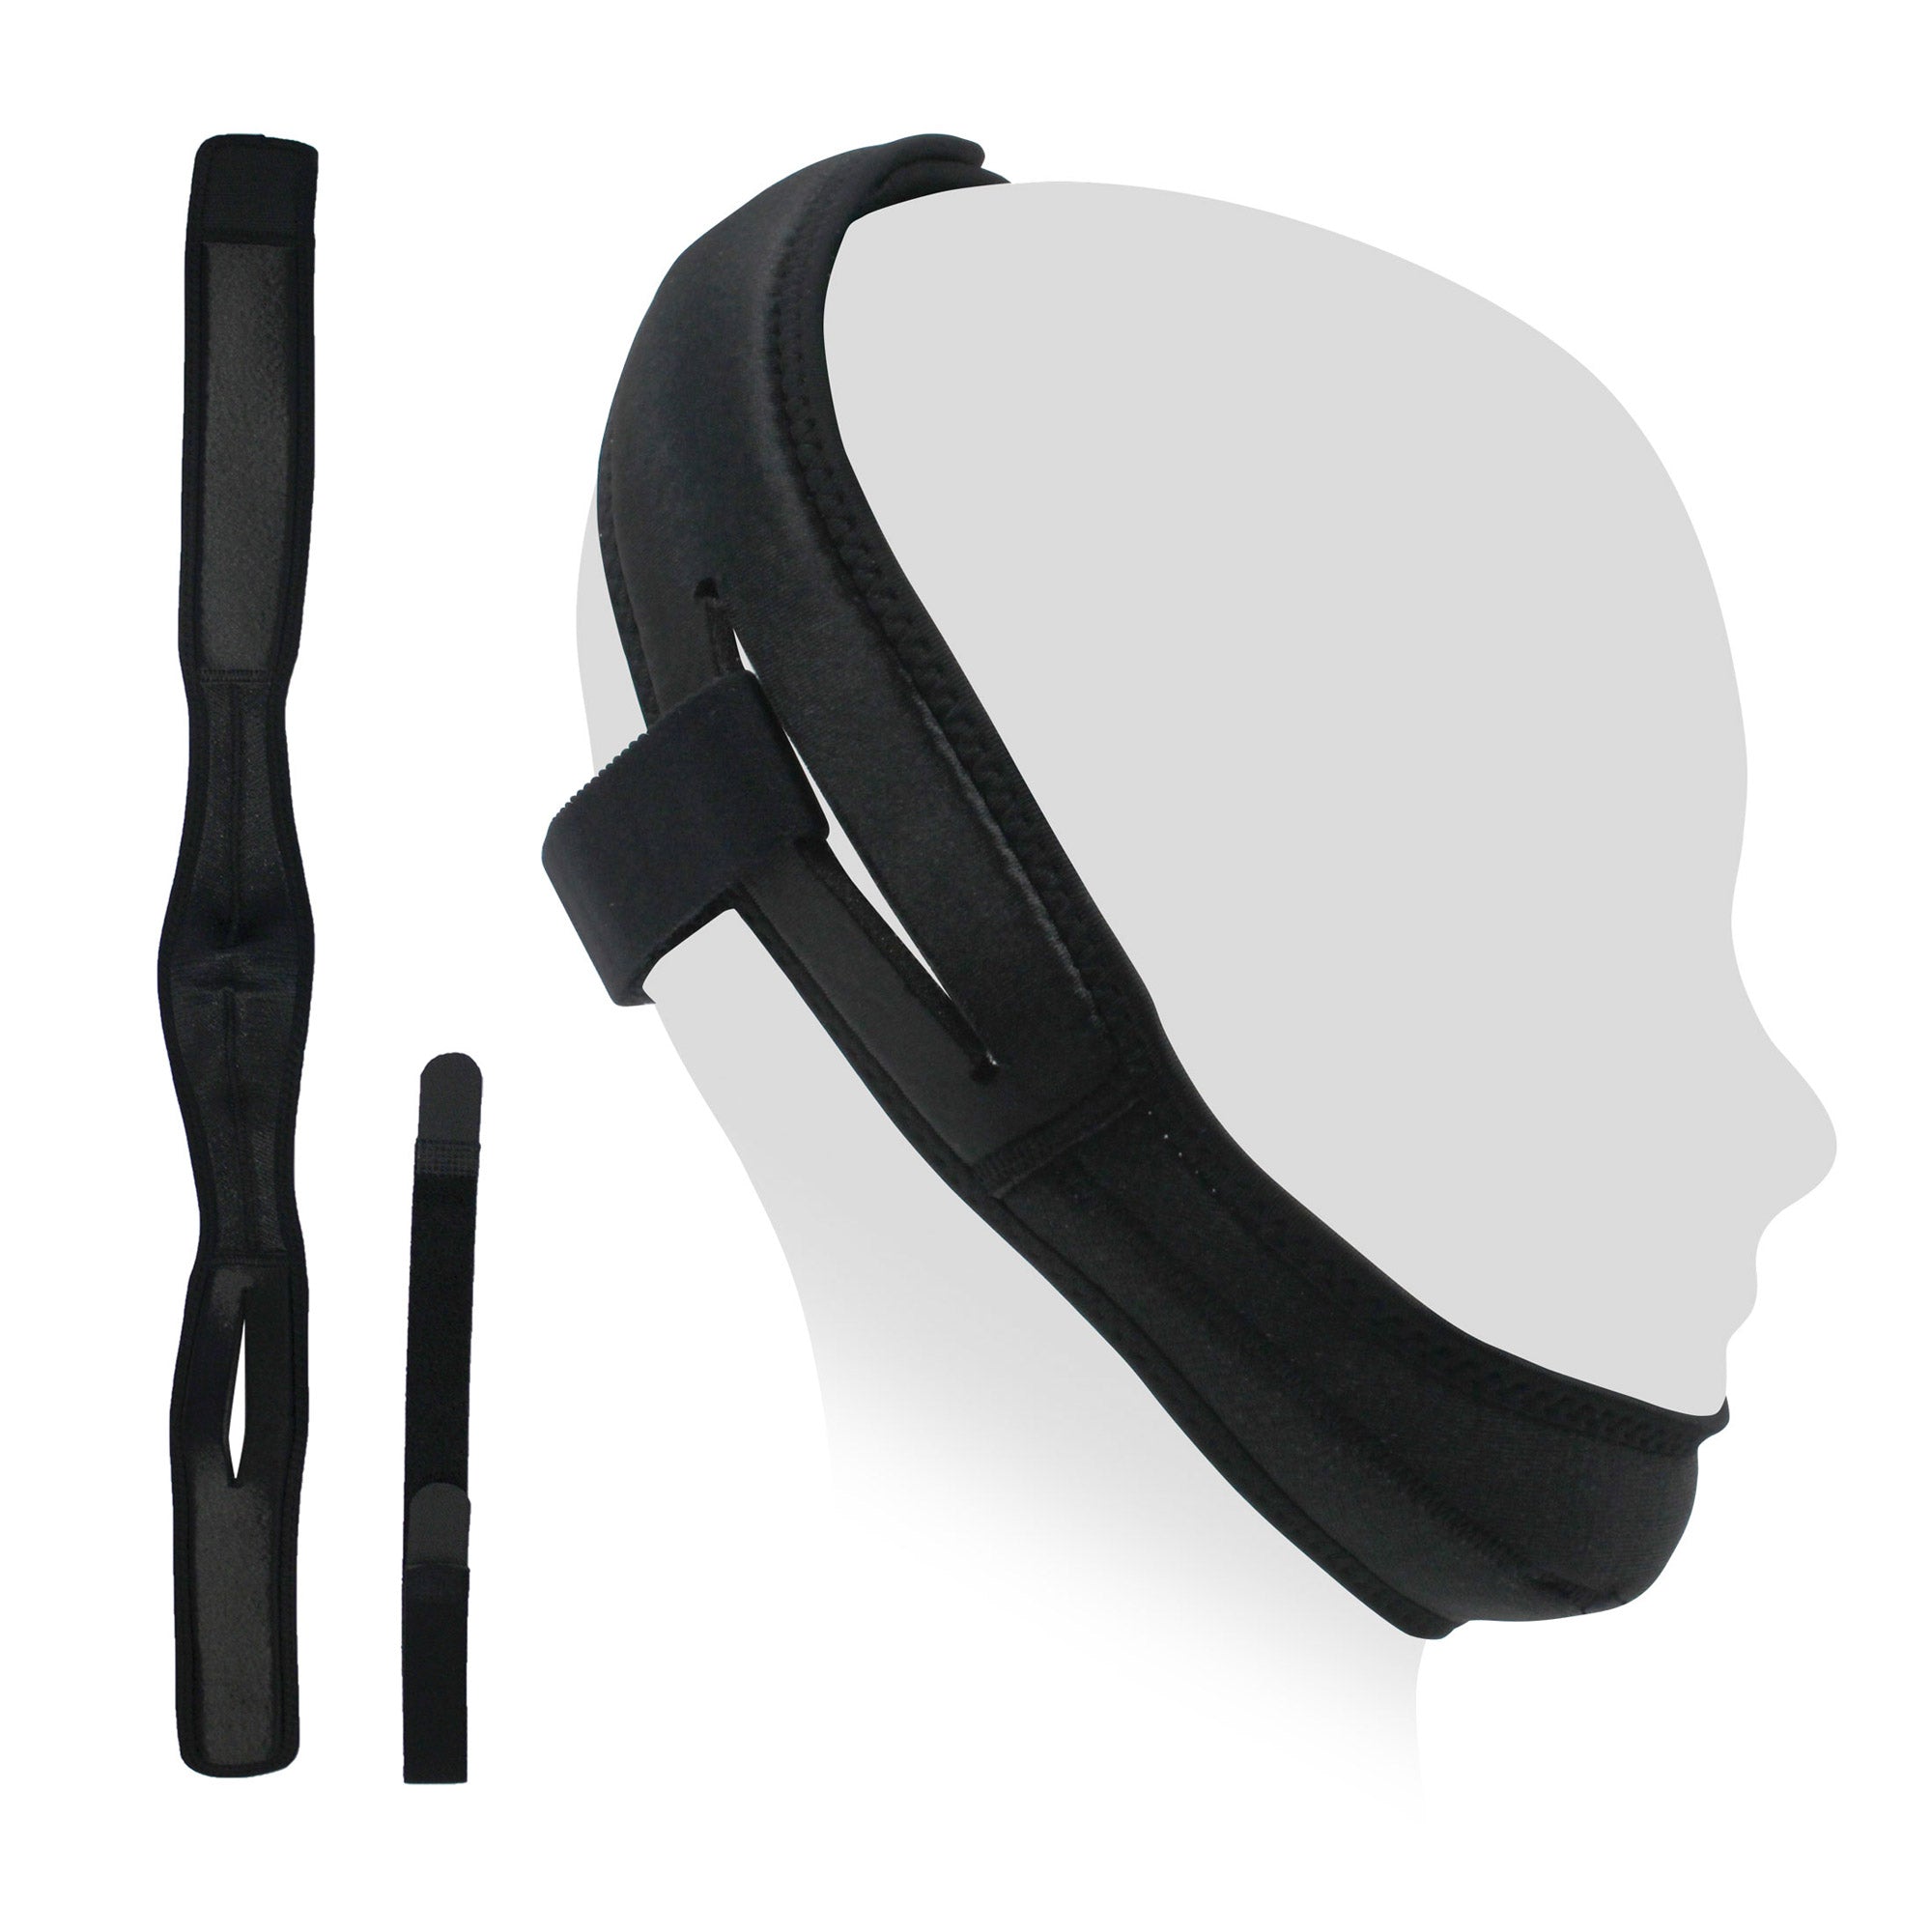 CLOUD Bamboo Organic CPAP Headgear Comfort Covers